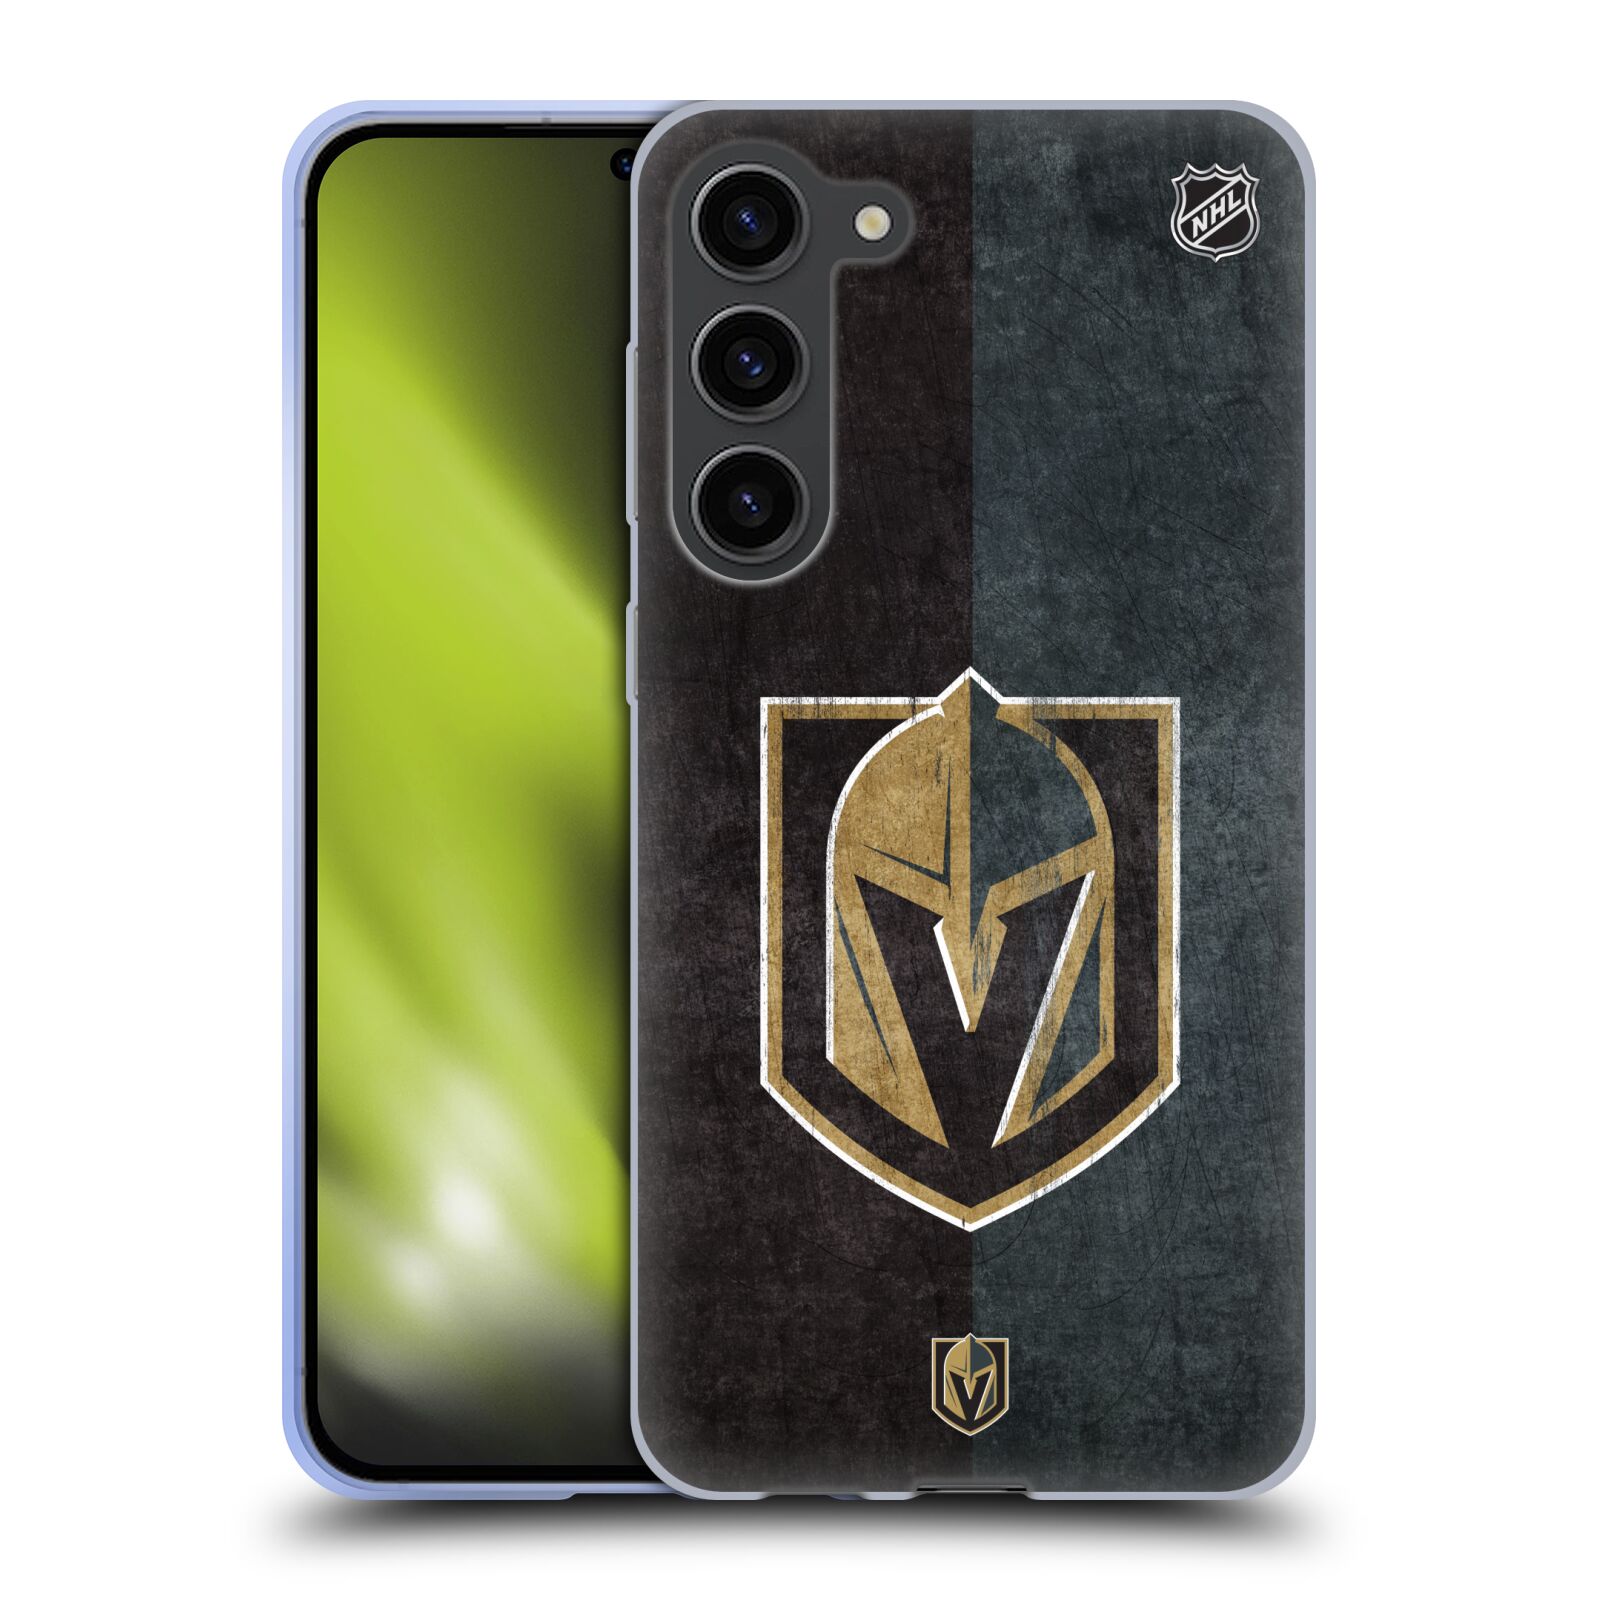 Silikonové pouzdro na mobil Samsung Galaxy S23 Plus - NHL - Půlené logo Vegas Golden Knights (Silikonový kryt, obal, pouzdro na mobilní telefon Samsung Galaxy S23 Plus s licencovaným motivem NHL - Půlené logo Vegas Golden Knights)